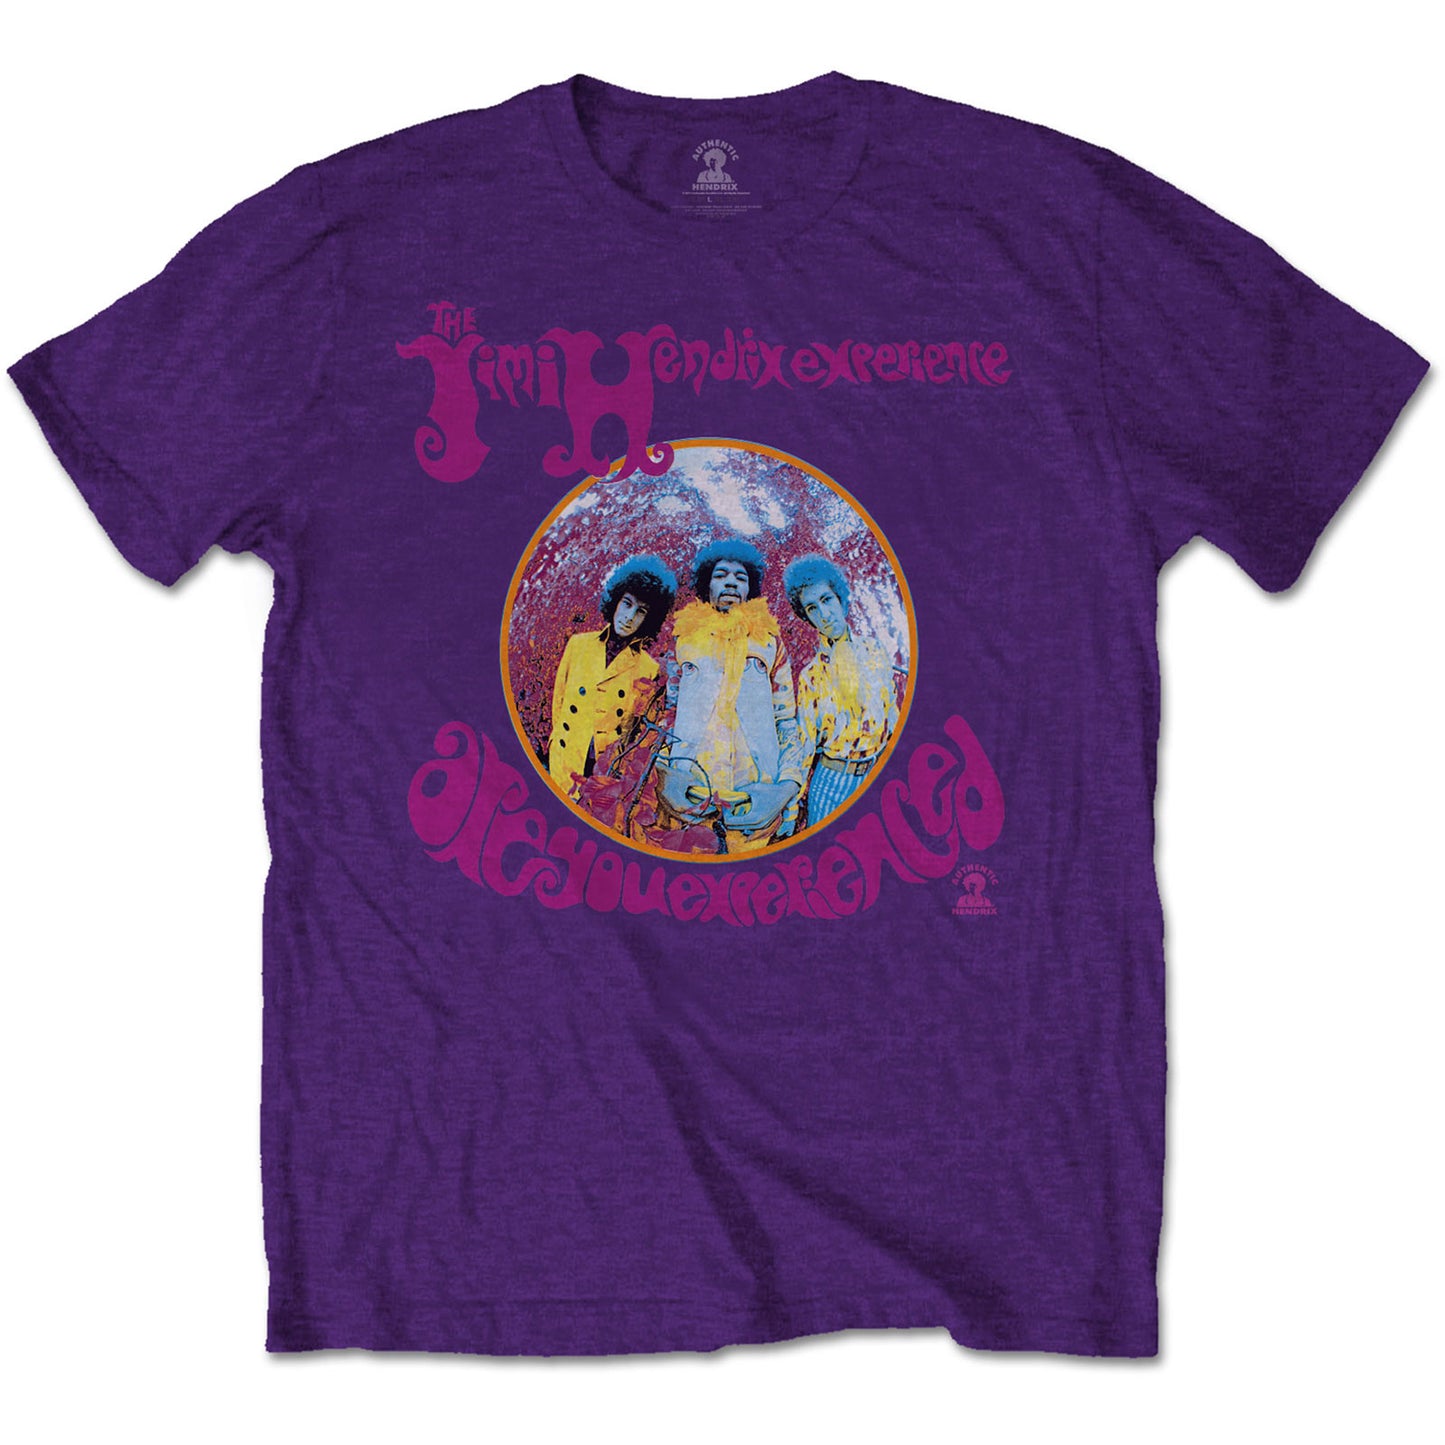 Jimi Hendrix T-Shirt: Are You Experienced?